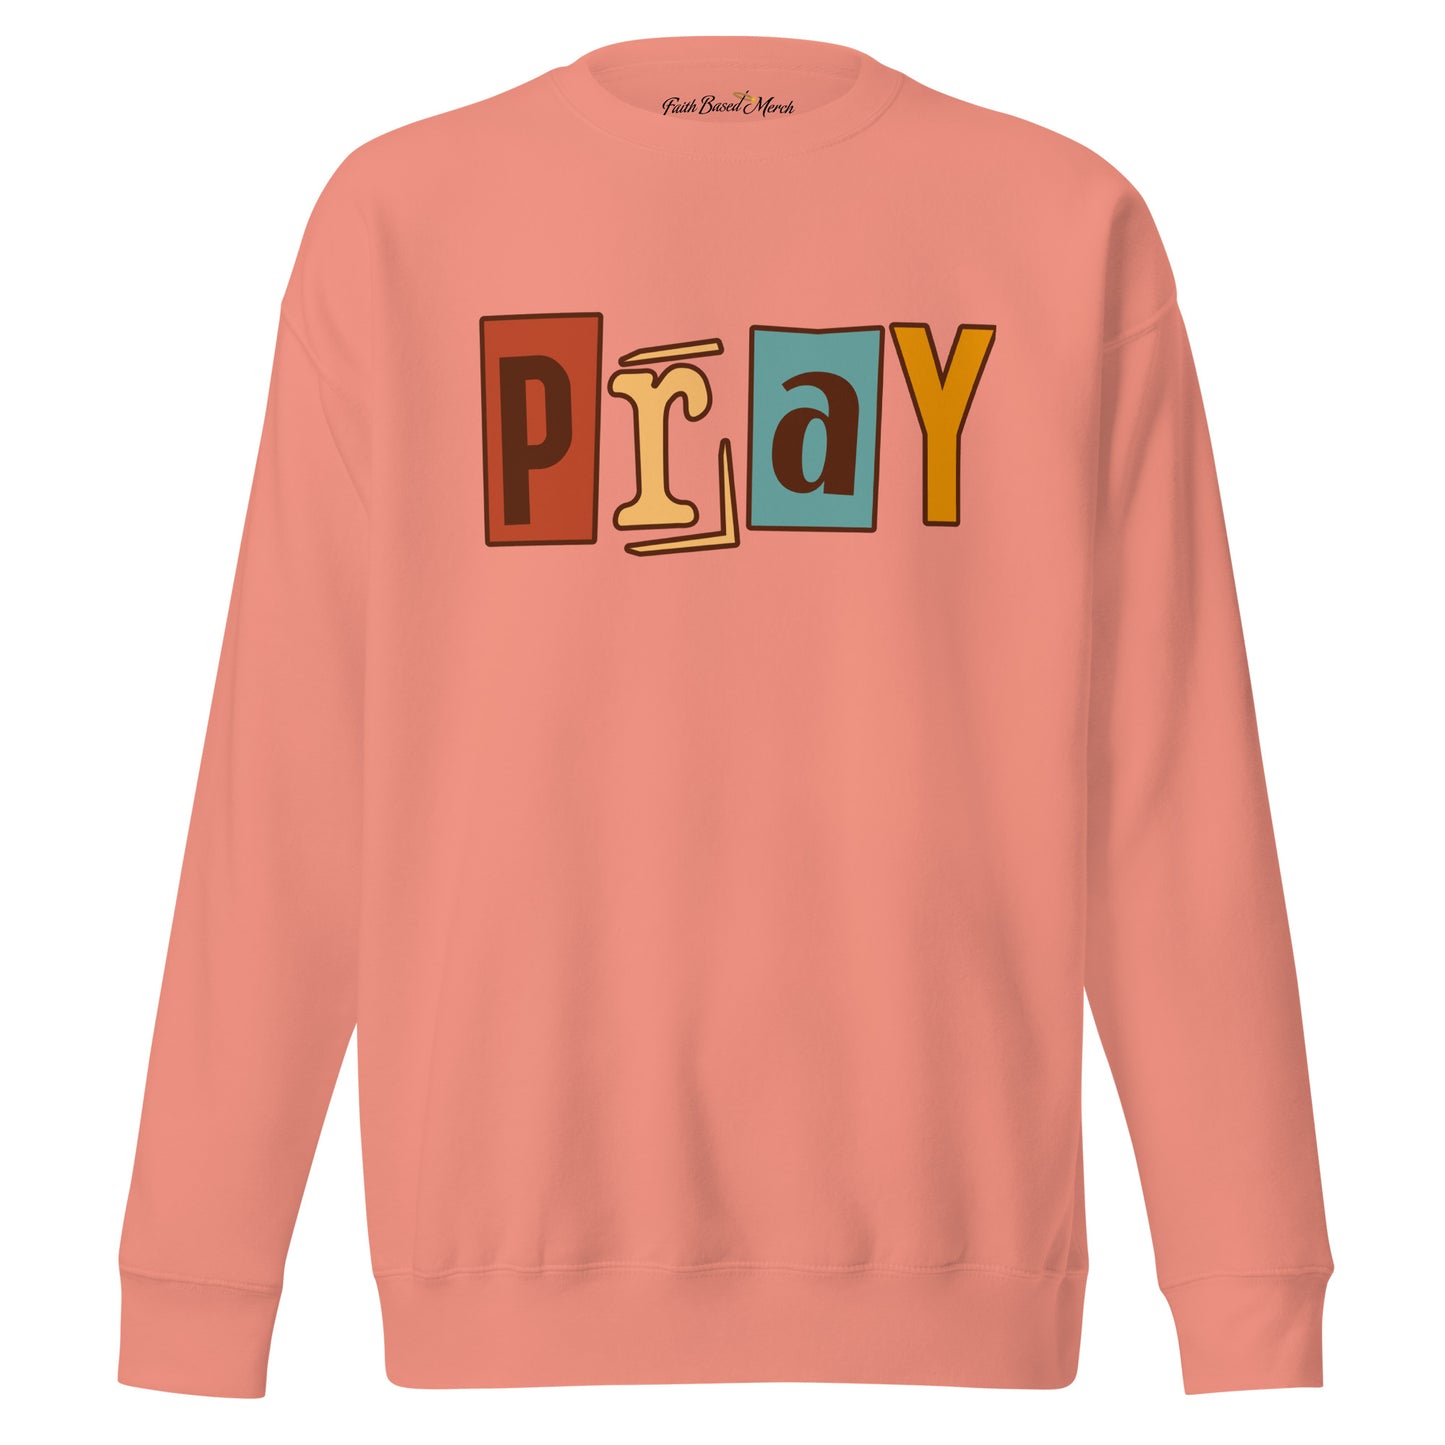 Pray Sweatshirt - Dusty Rose